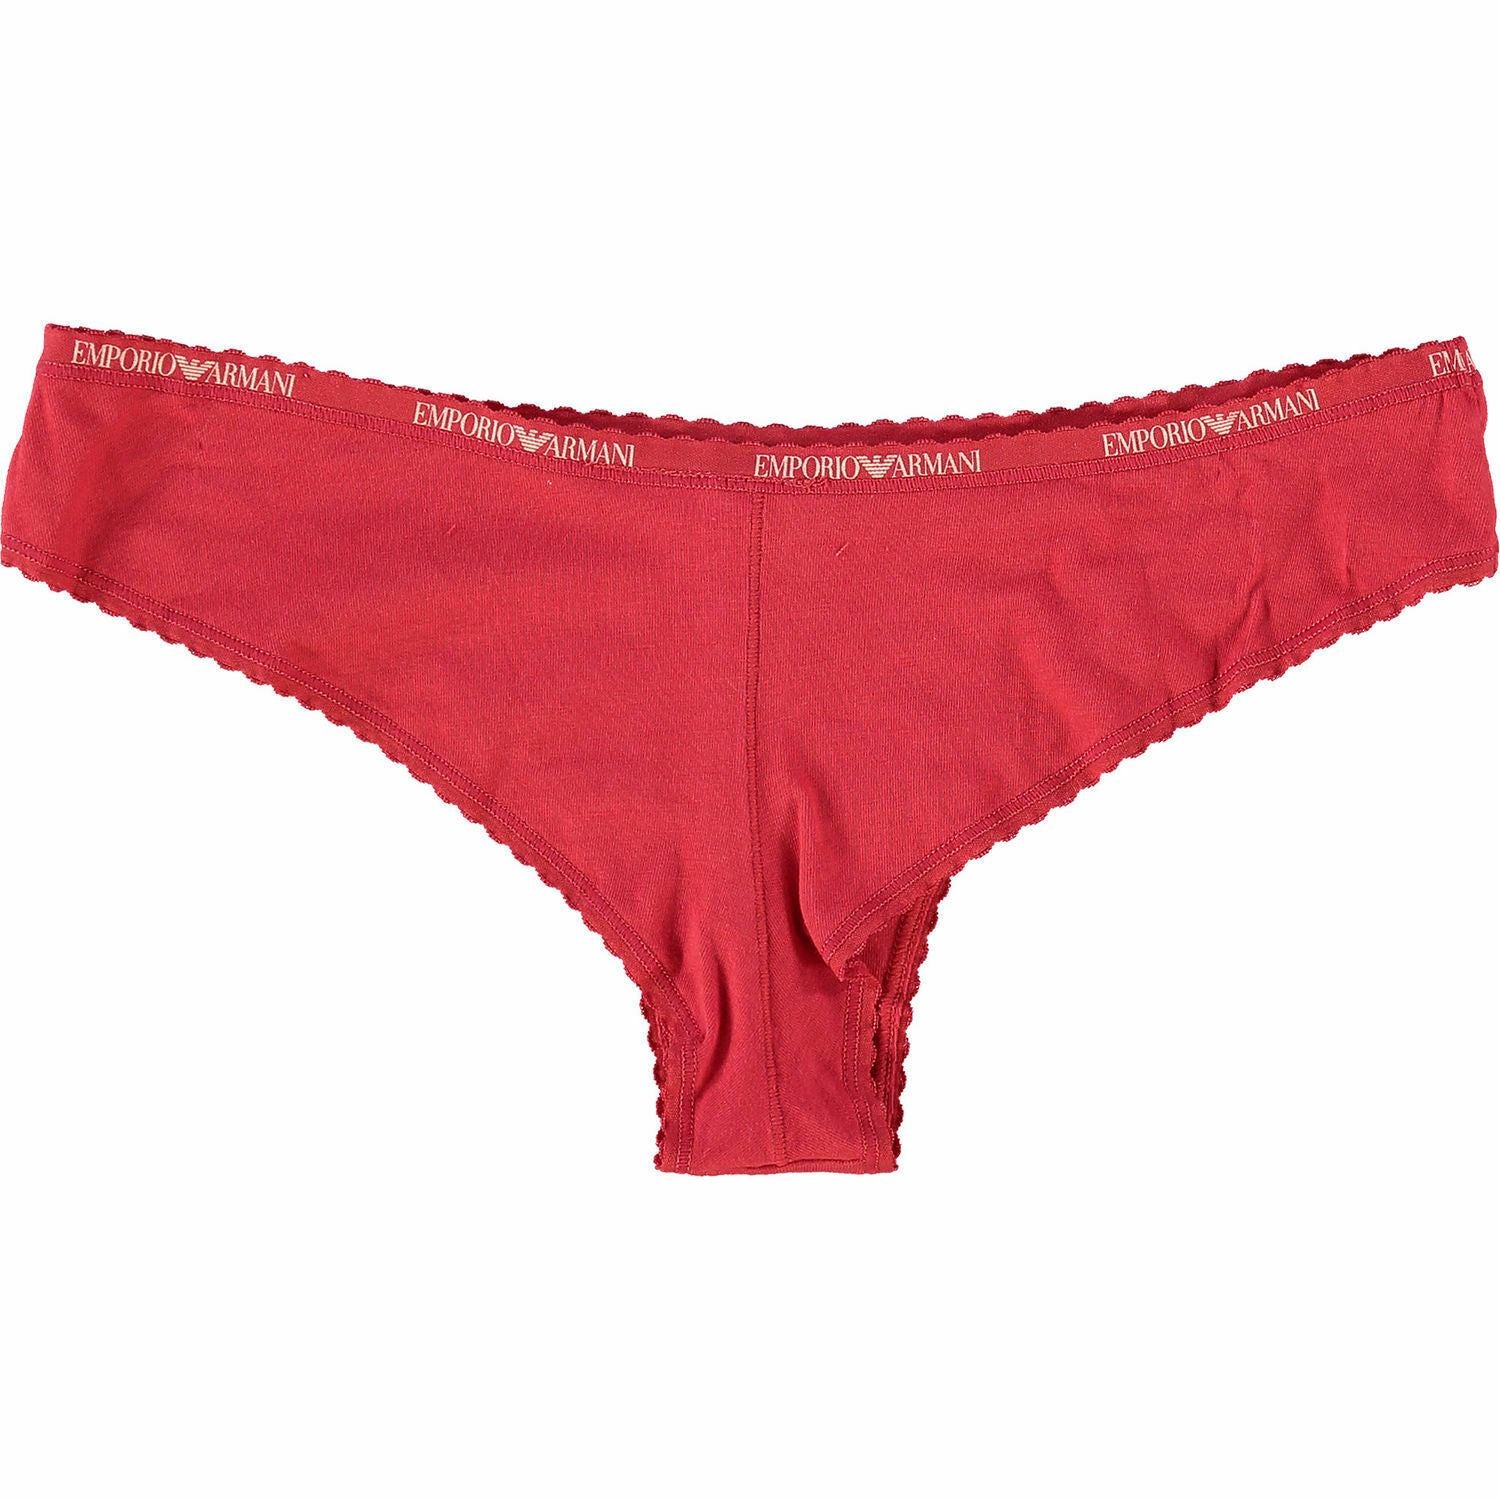 EMPORIO ARMANI Womens Underwear Red Logo Brasilian Brief size XS